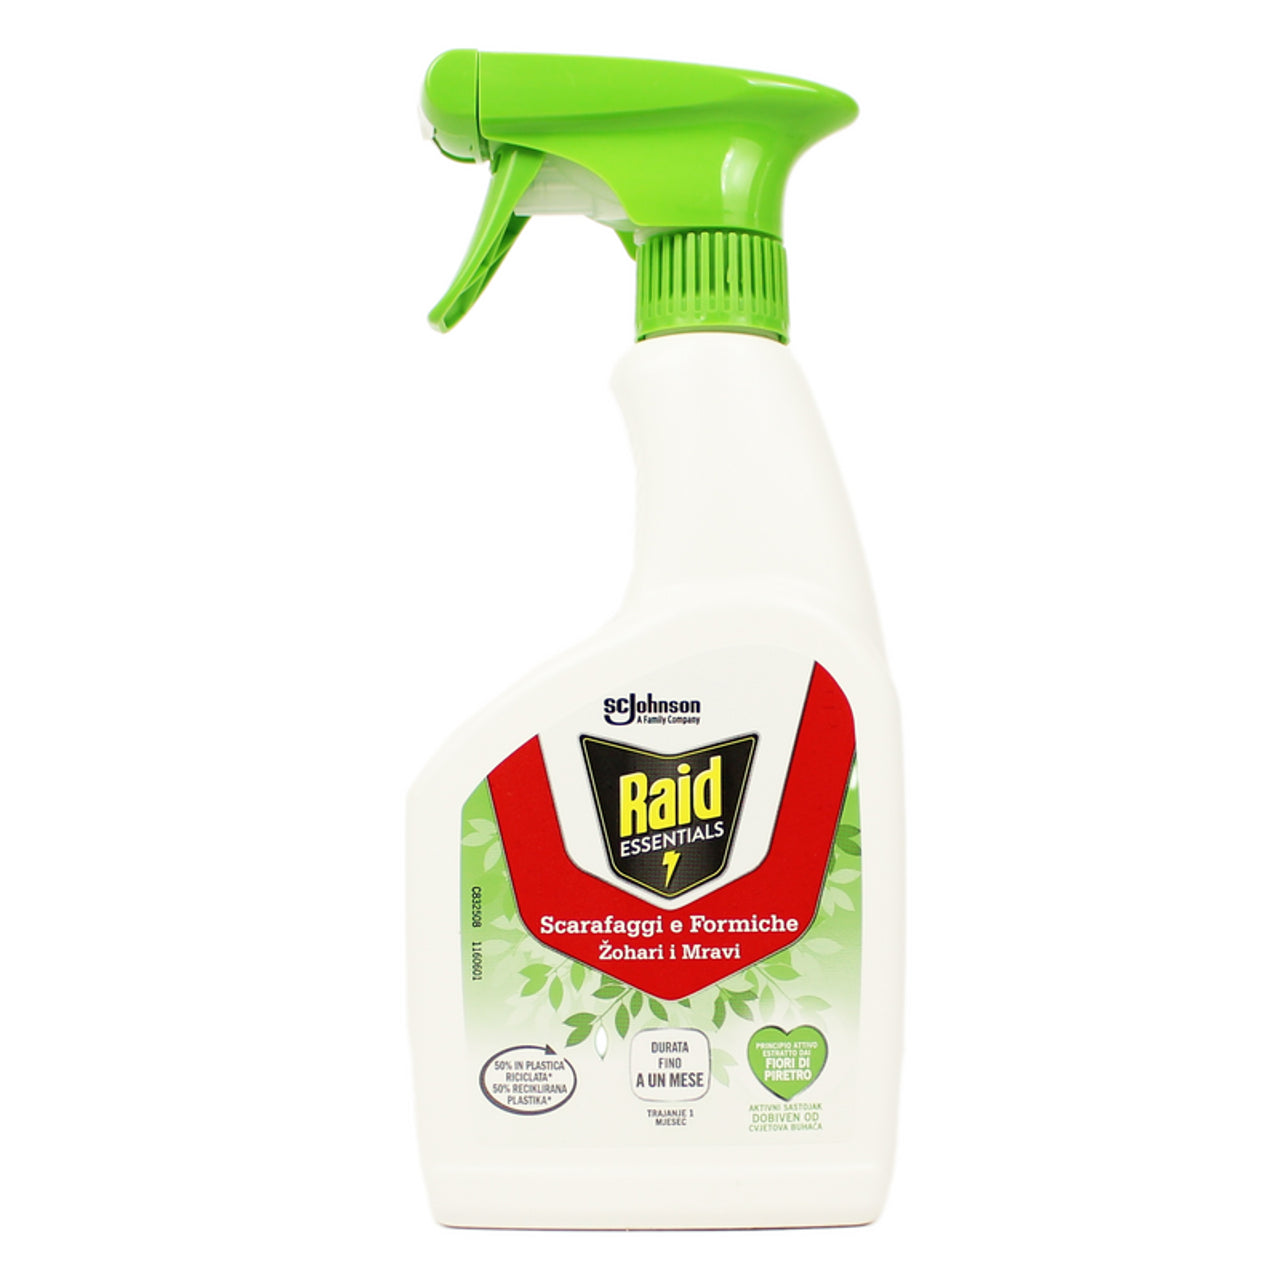 Raid Insecticide Essentials Scarafaggi & Ants Trigger 500 ml